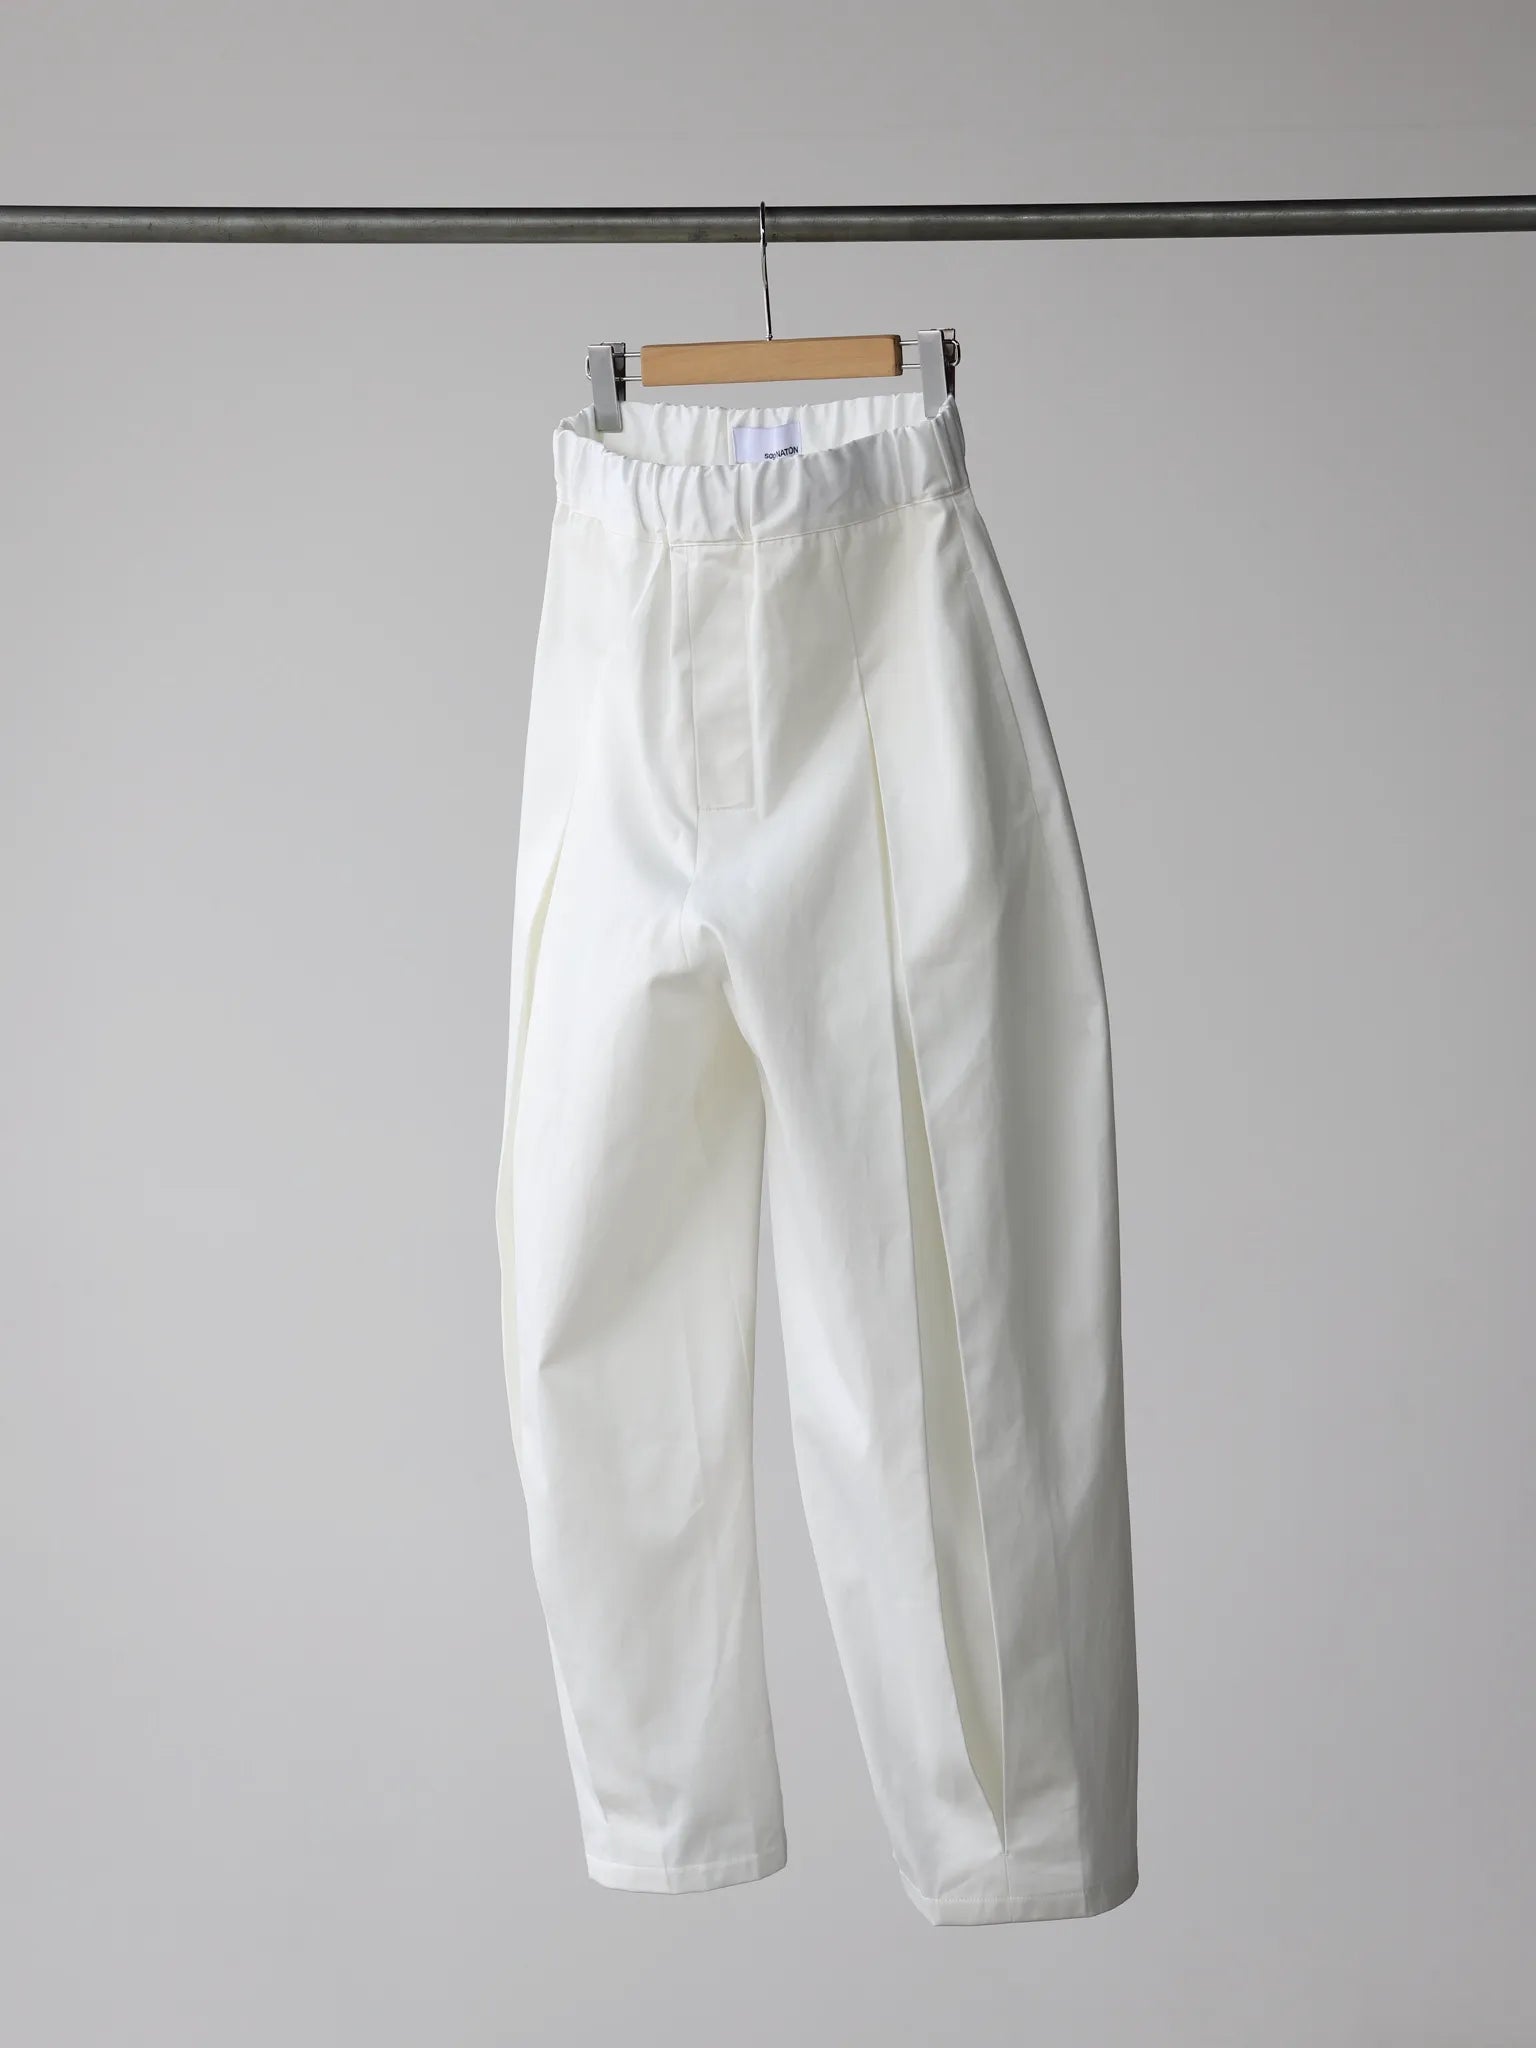 sage-nation-box-pleat-trouser-optic-white-1-1